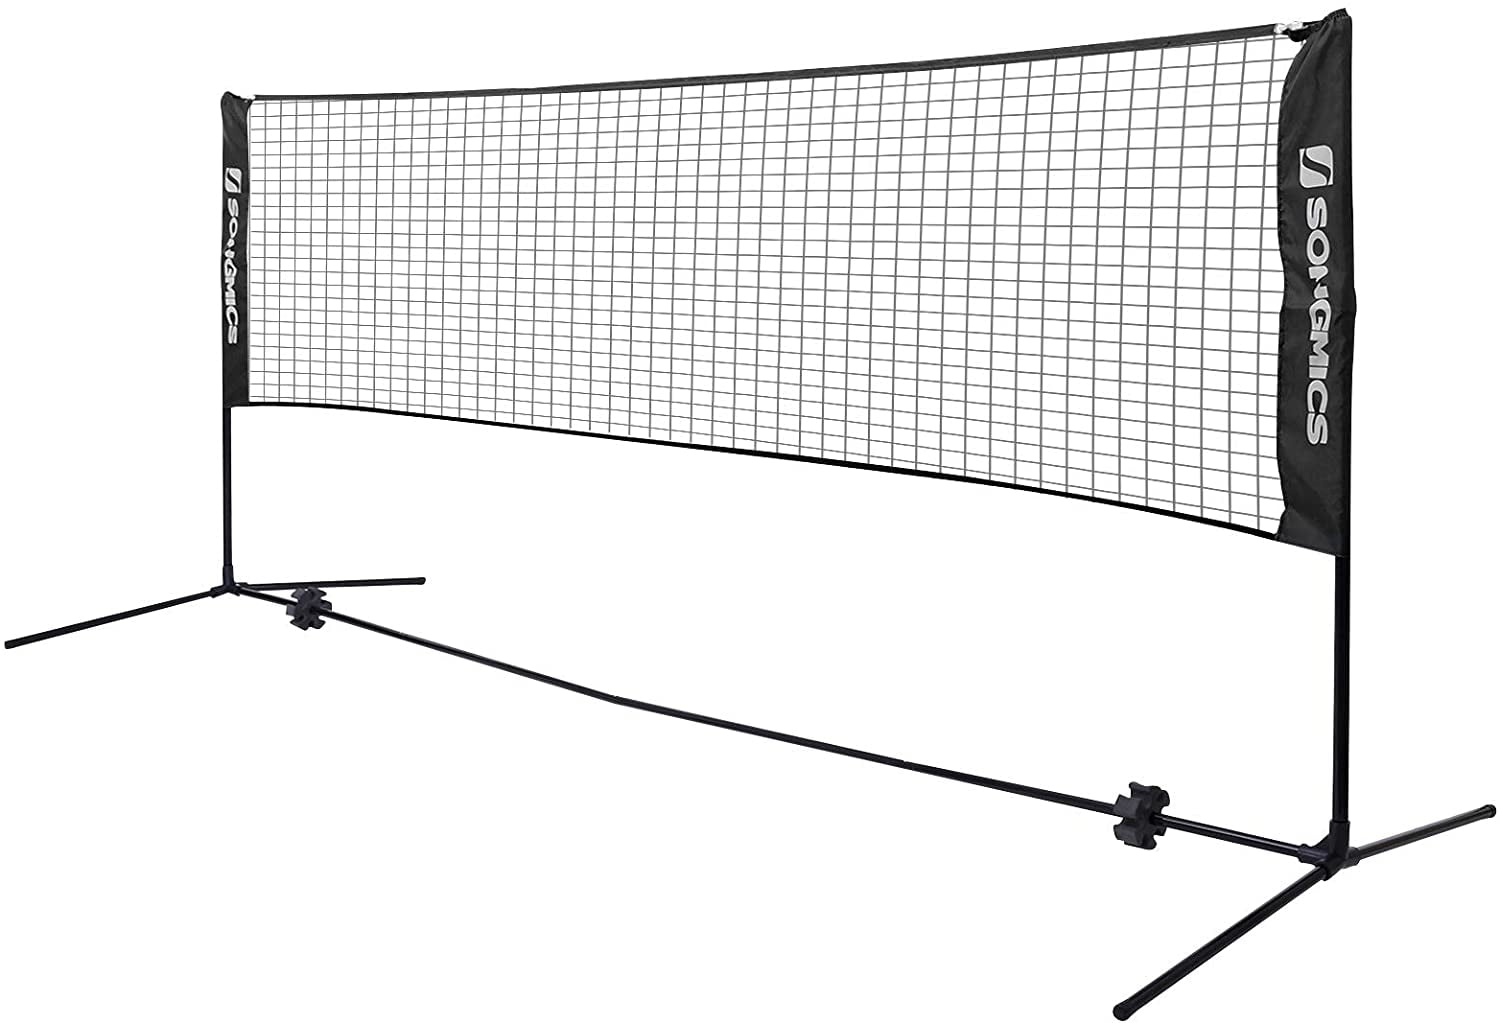 SONGMICS Badminton Net Set, Portable Sports Set for Badminton